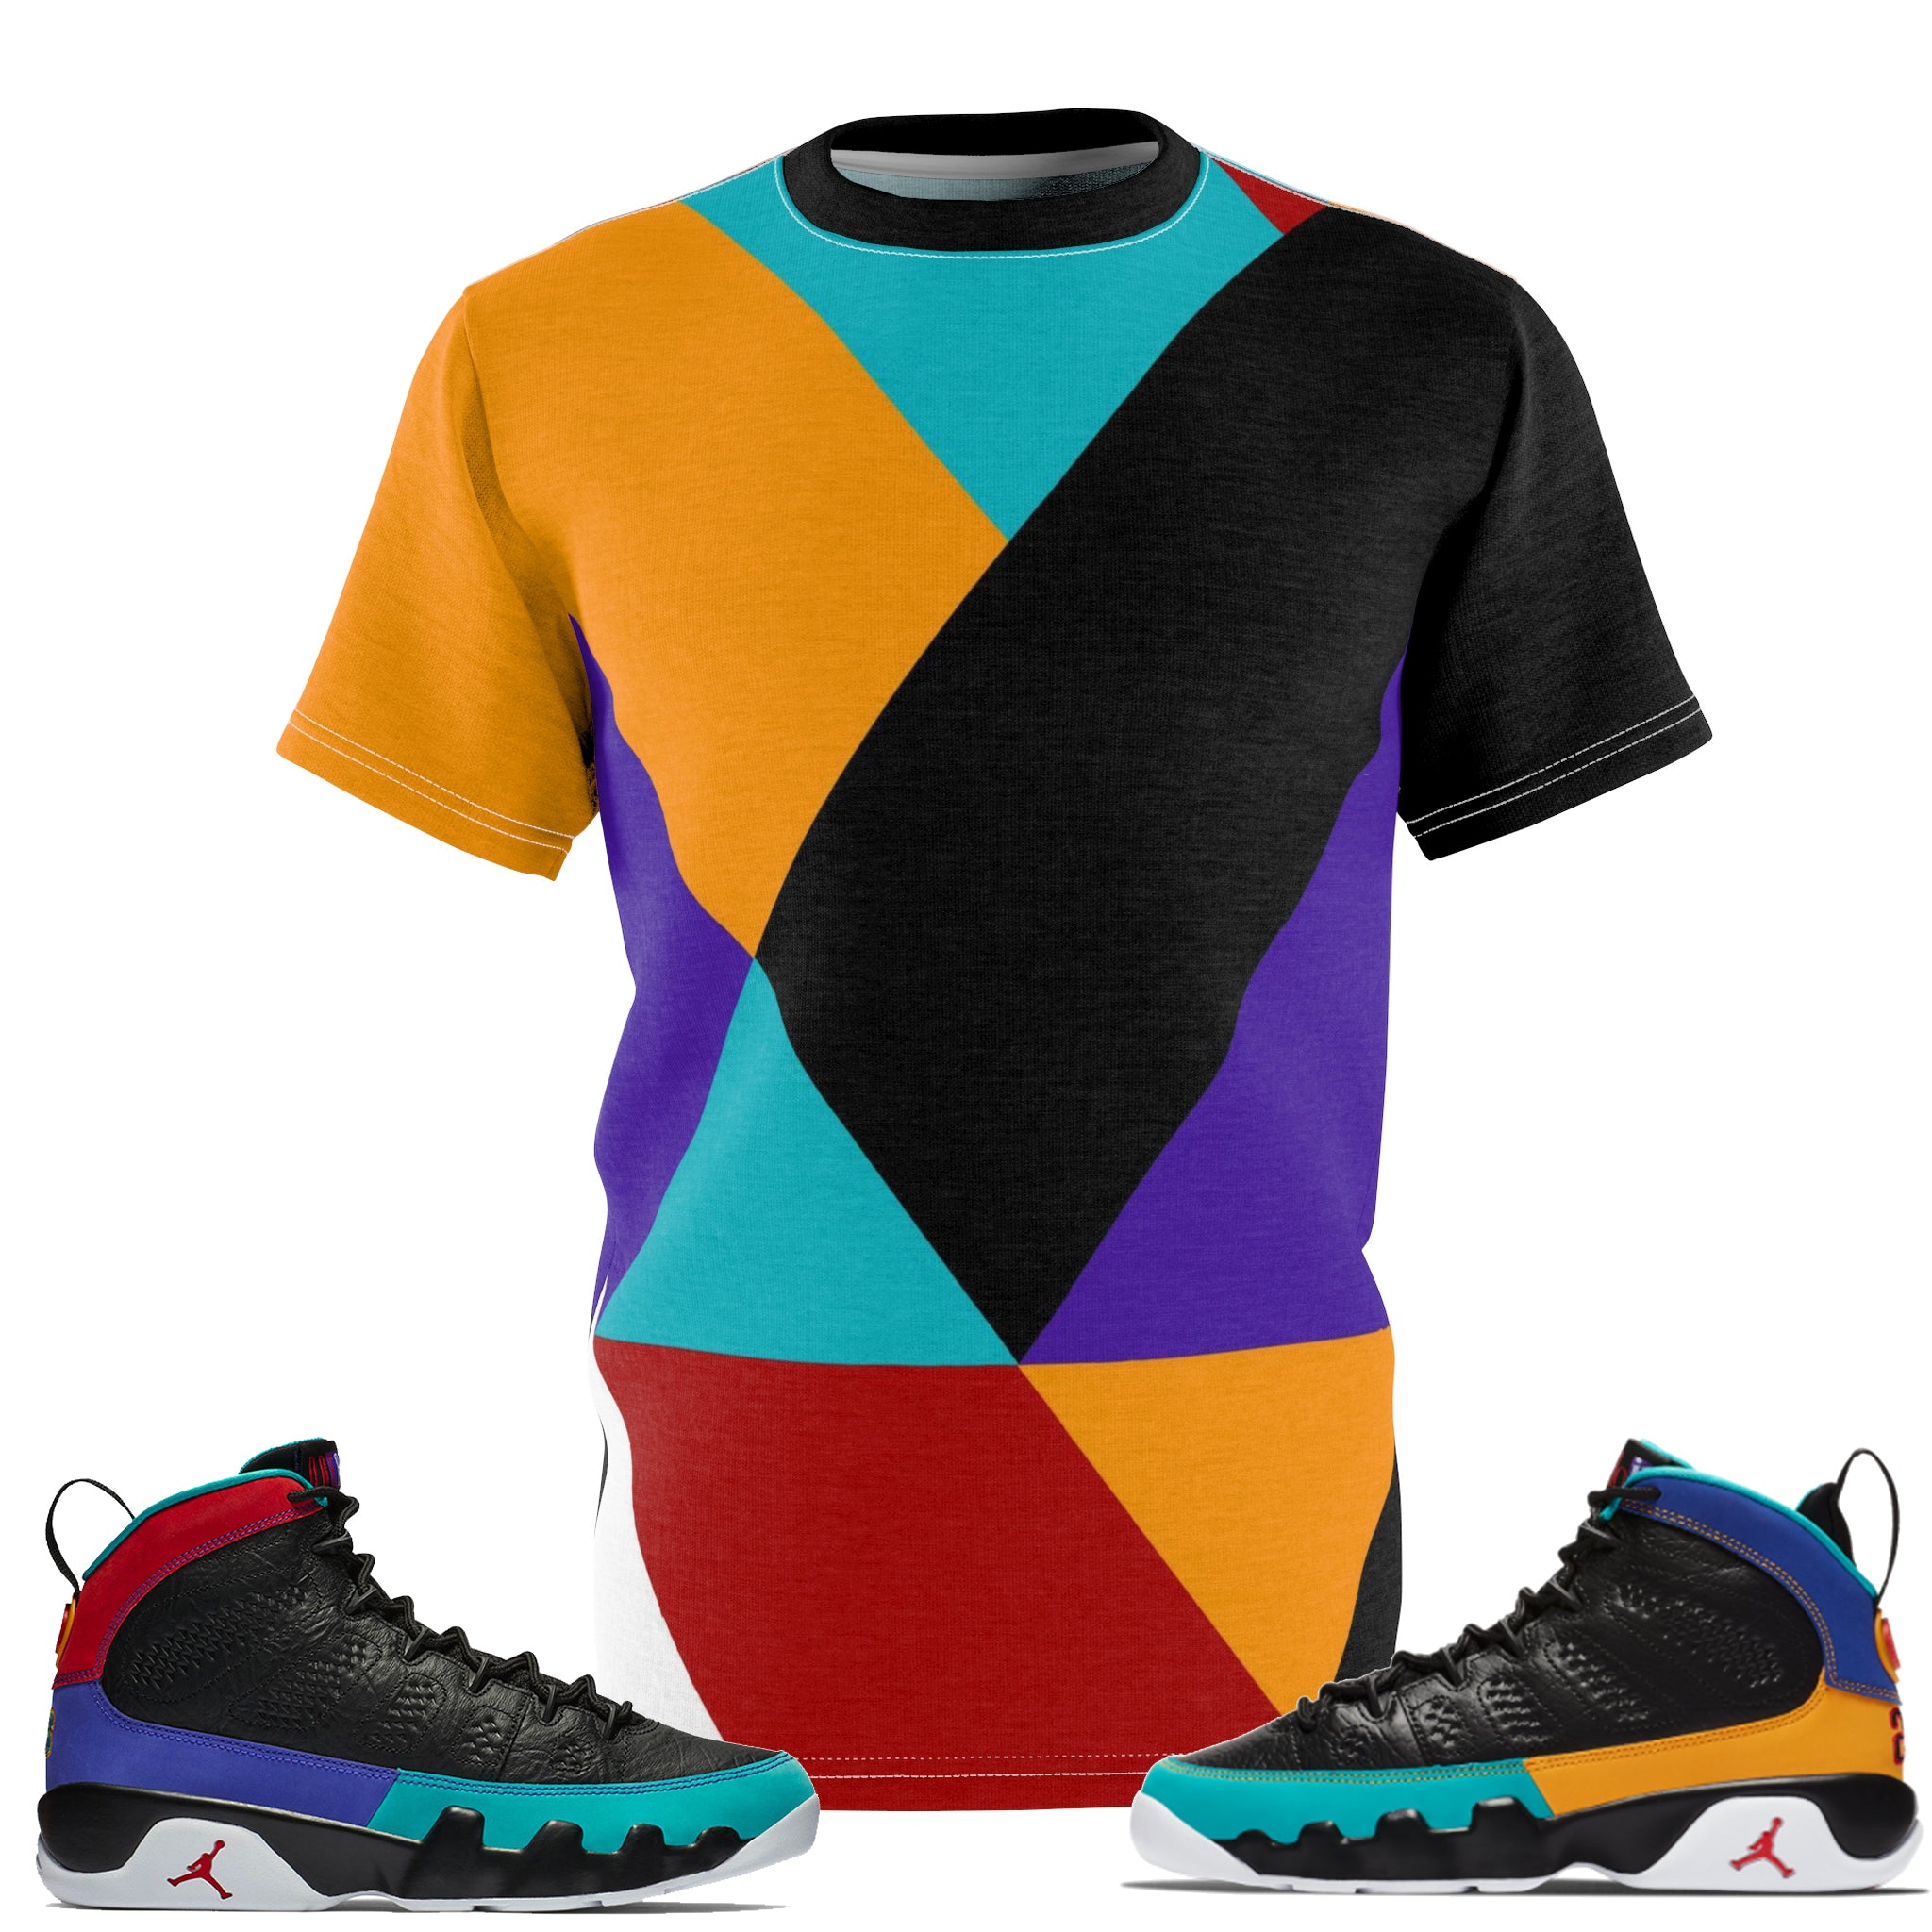 Shirt to Match Jordan 9 Dream It Do It Sneaker Colorway Blocked NowServingShirts